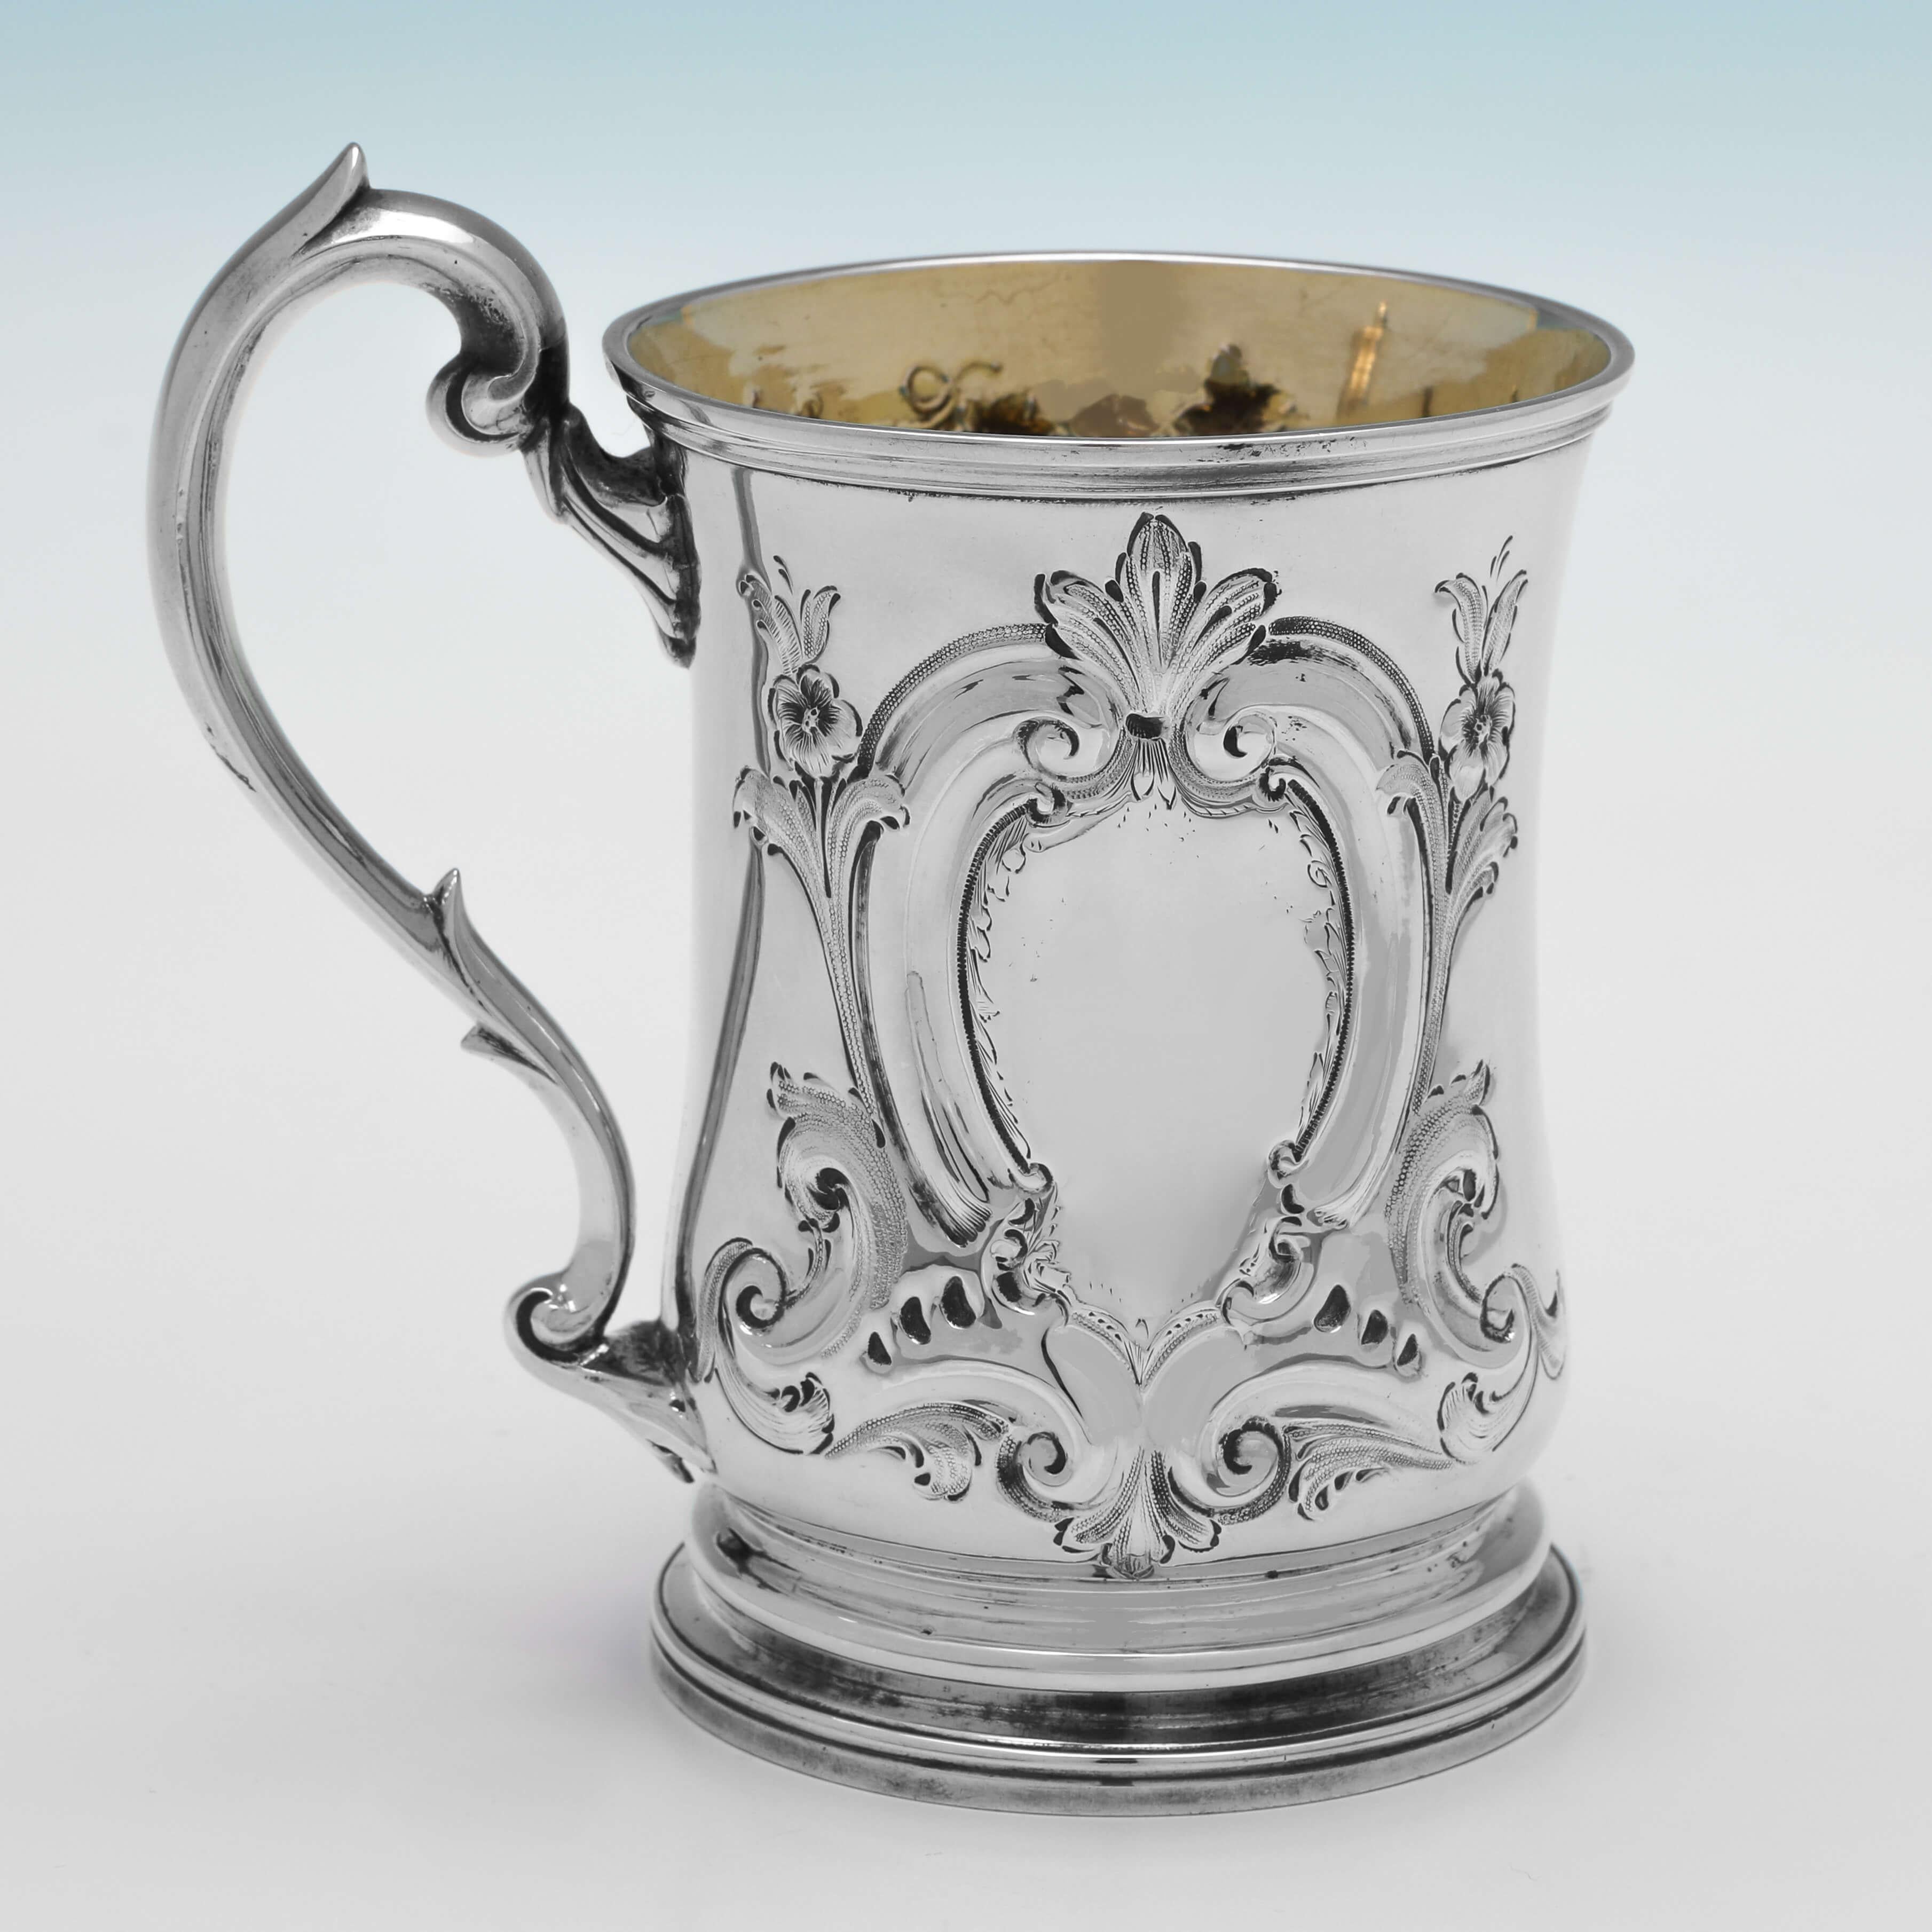 Baroque Victorian Sterling Silver Child's Mug or Christening Mug, Barnards, London, 1856